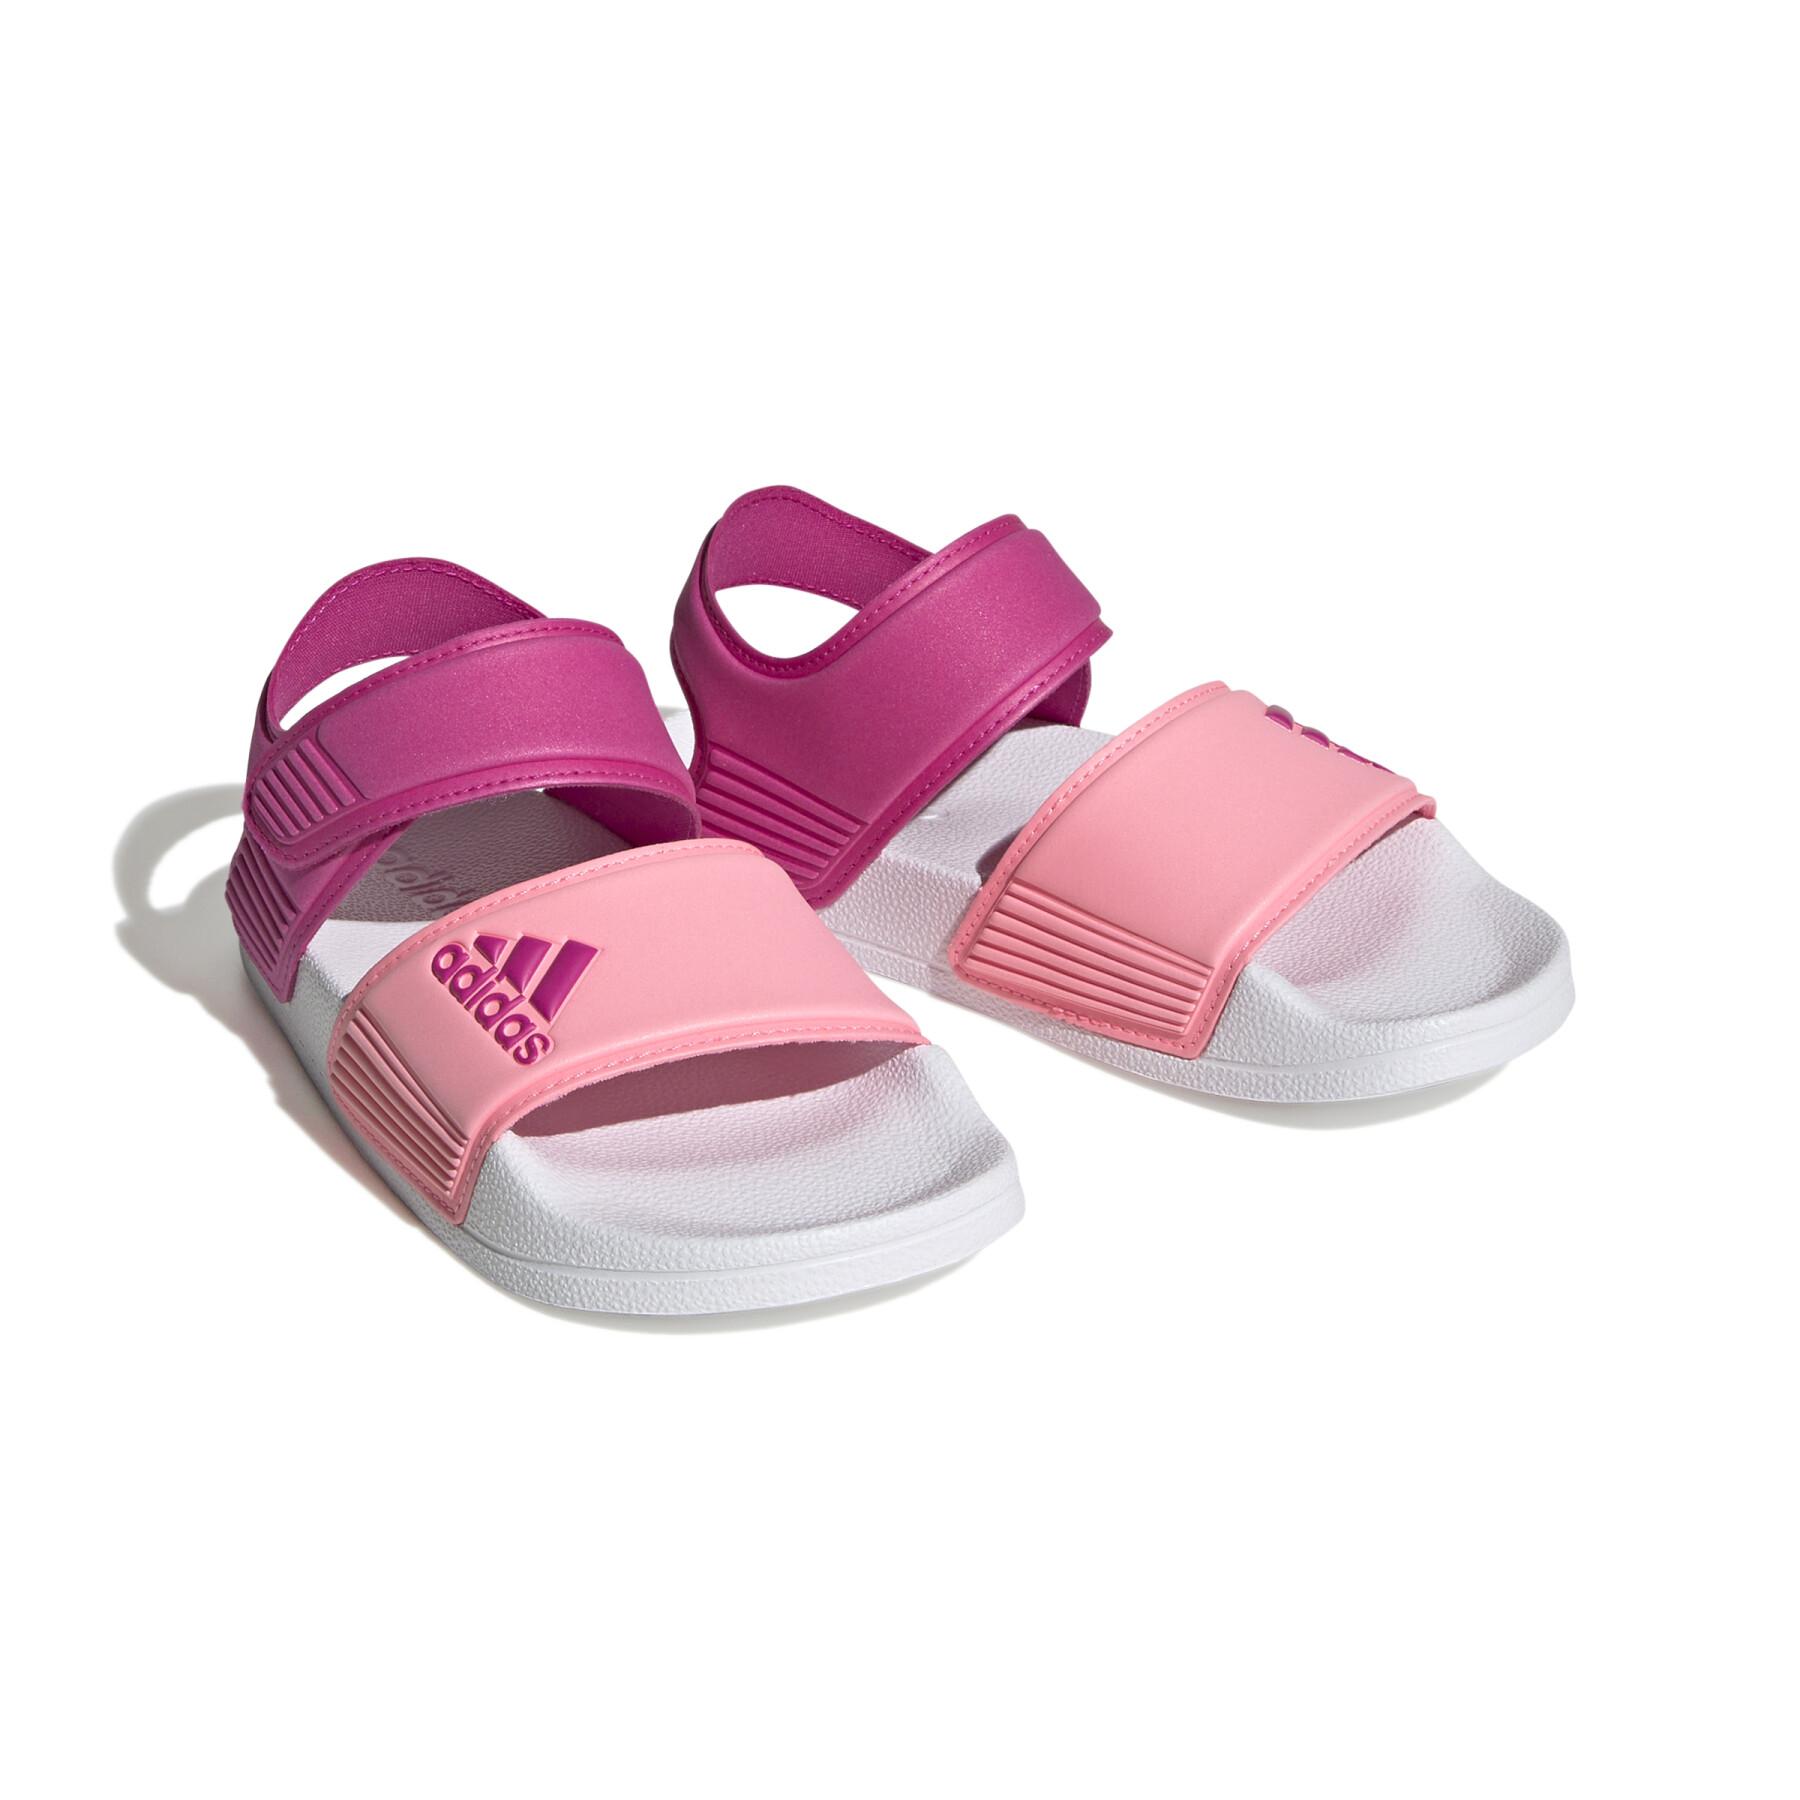 Children's sandals adidas Adilette